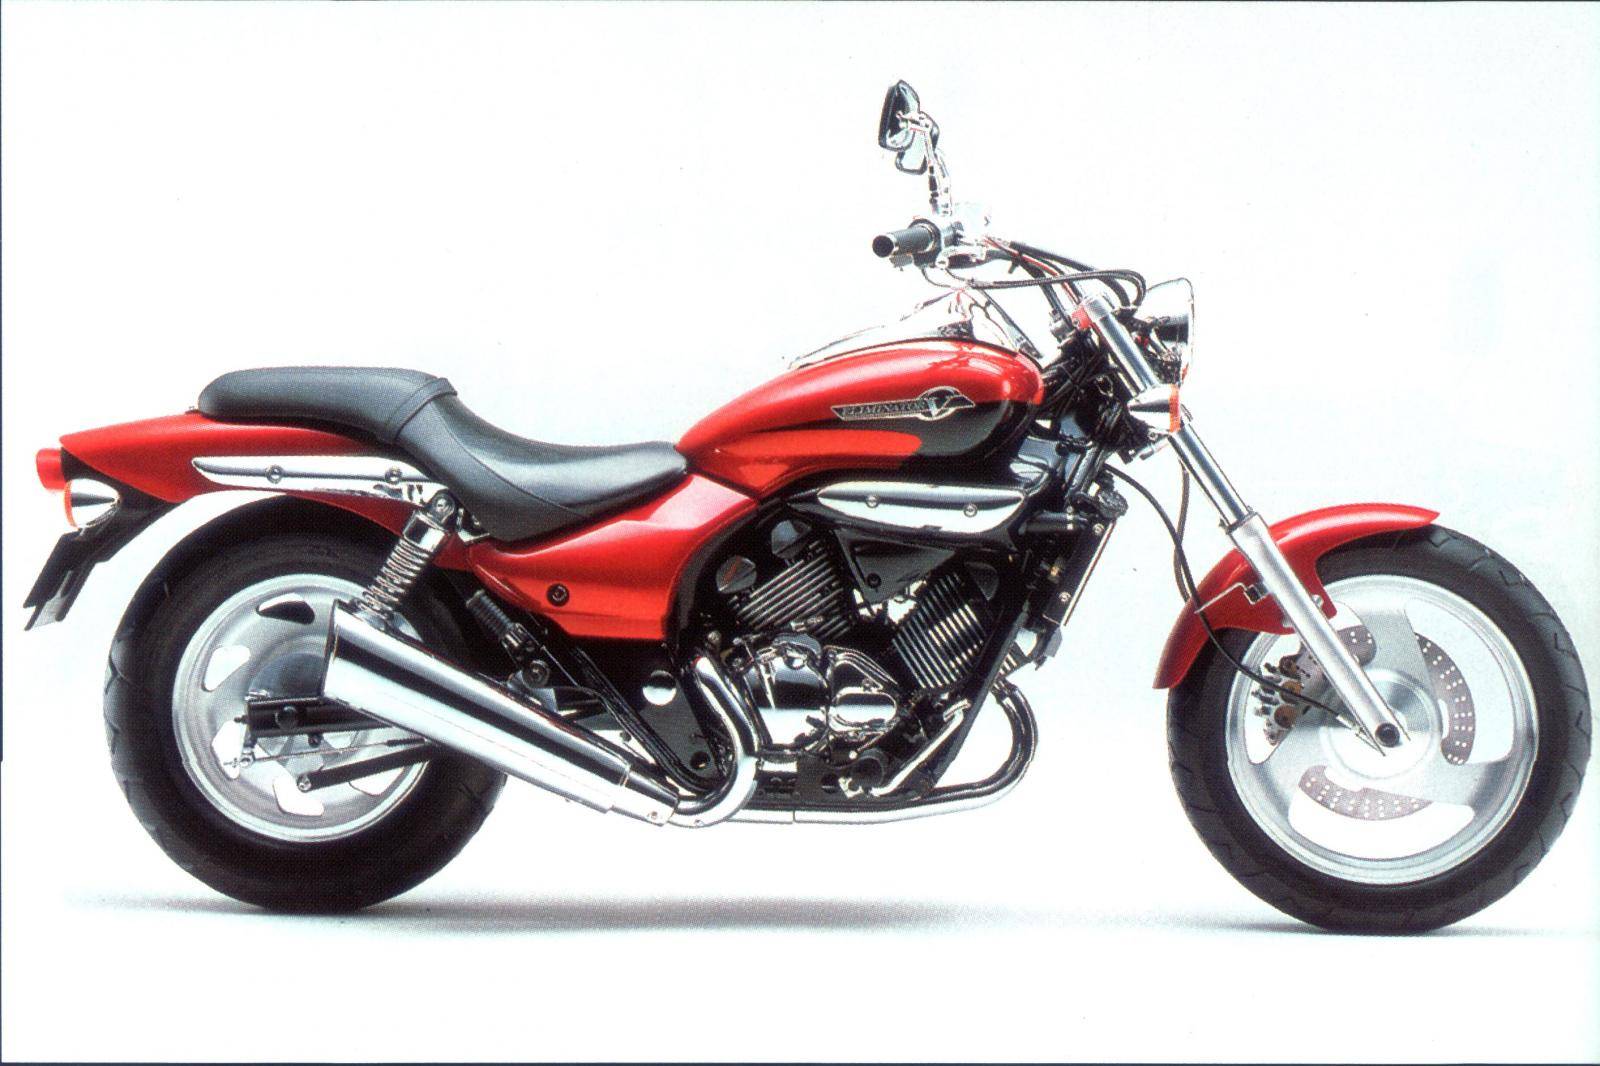 Kawasaki kle250: технические характеристики, фото anhelo, отзывы